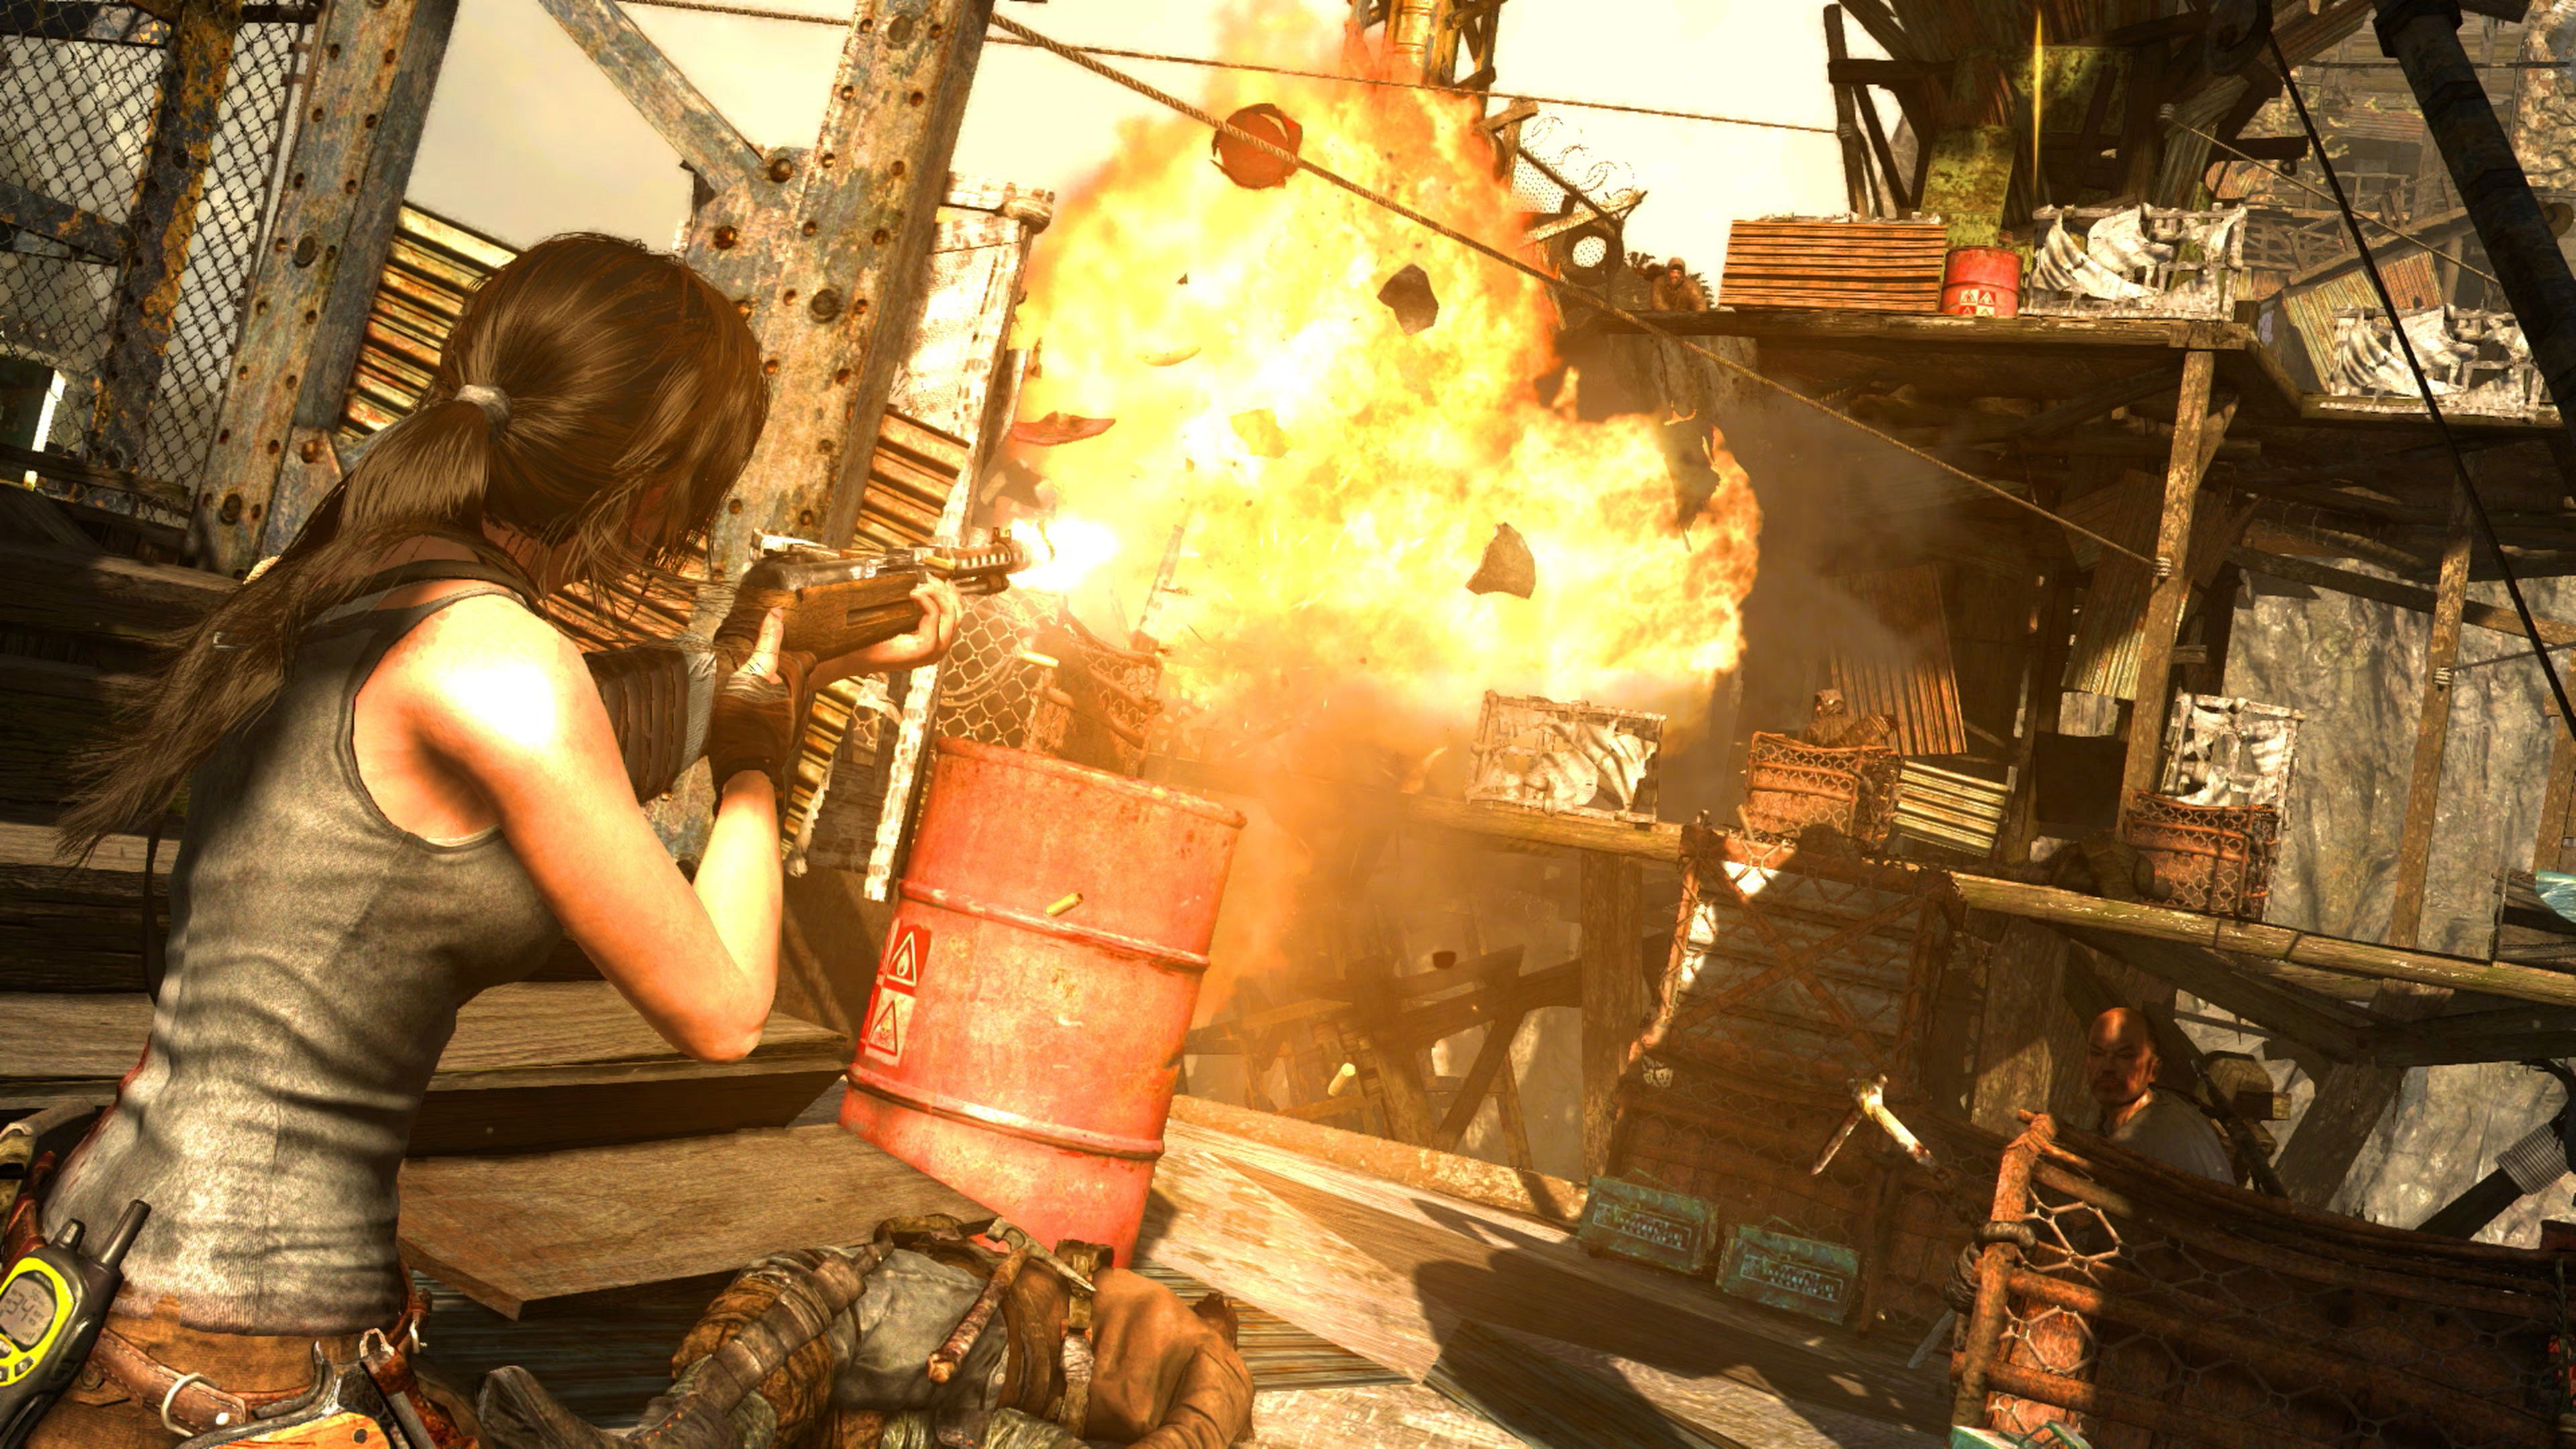 Avance de Tomb Raider: Definitive Edition